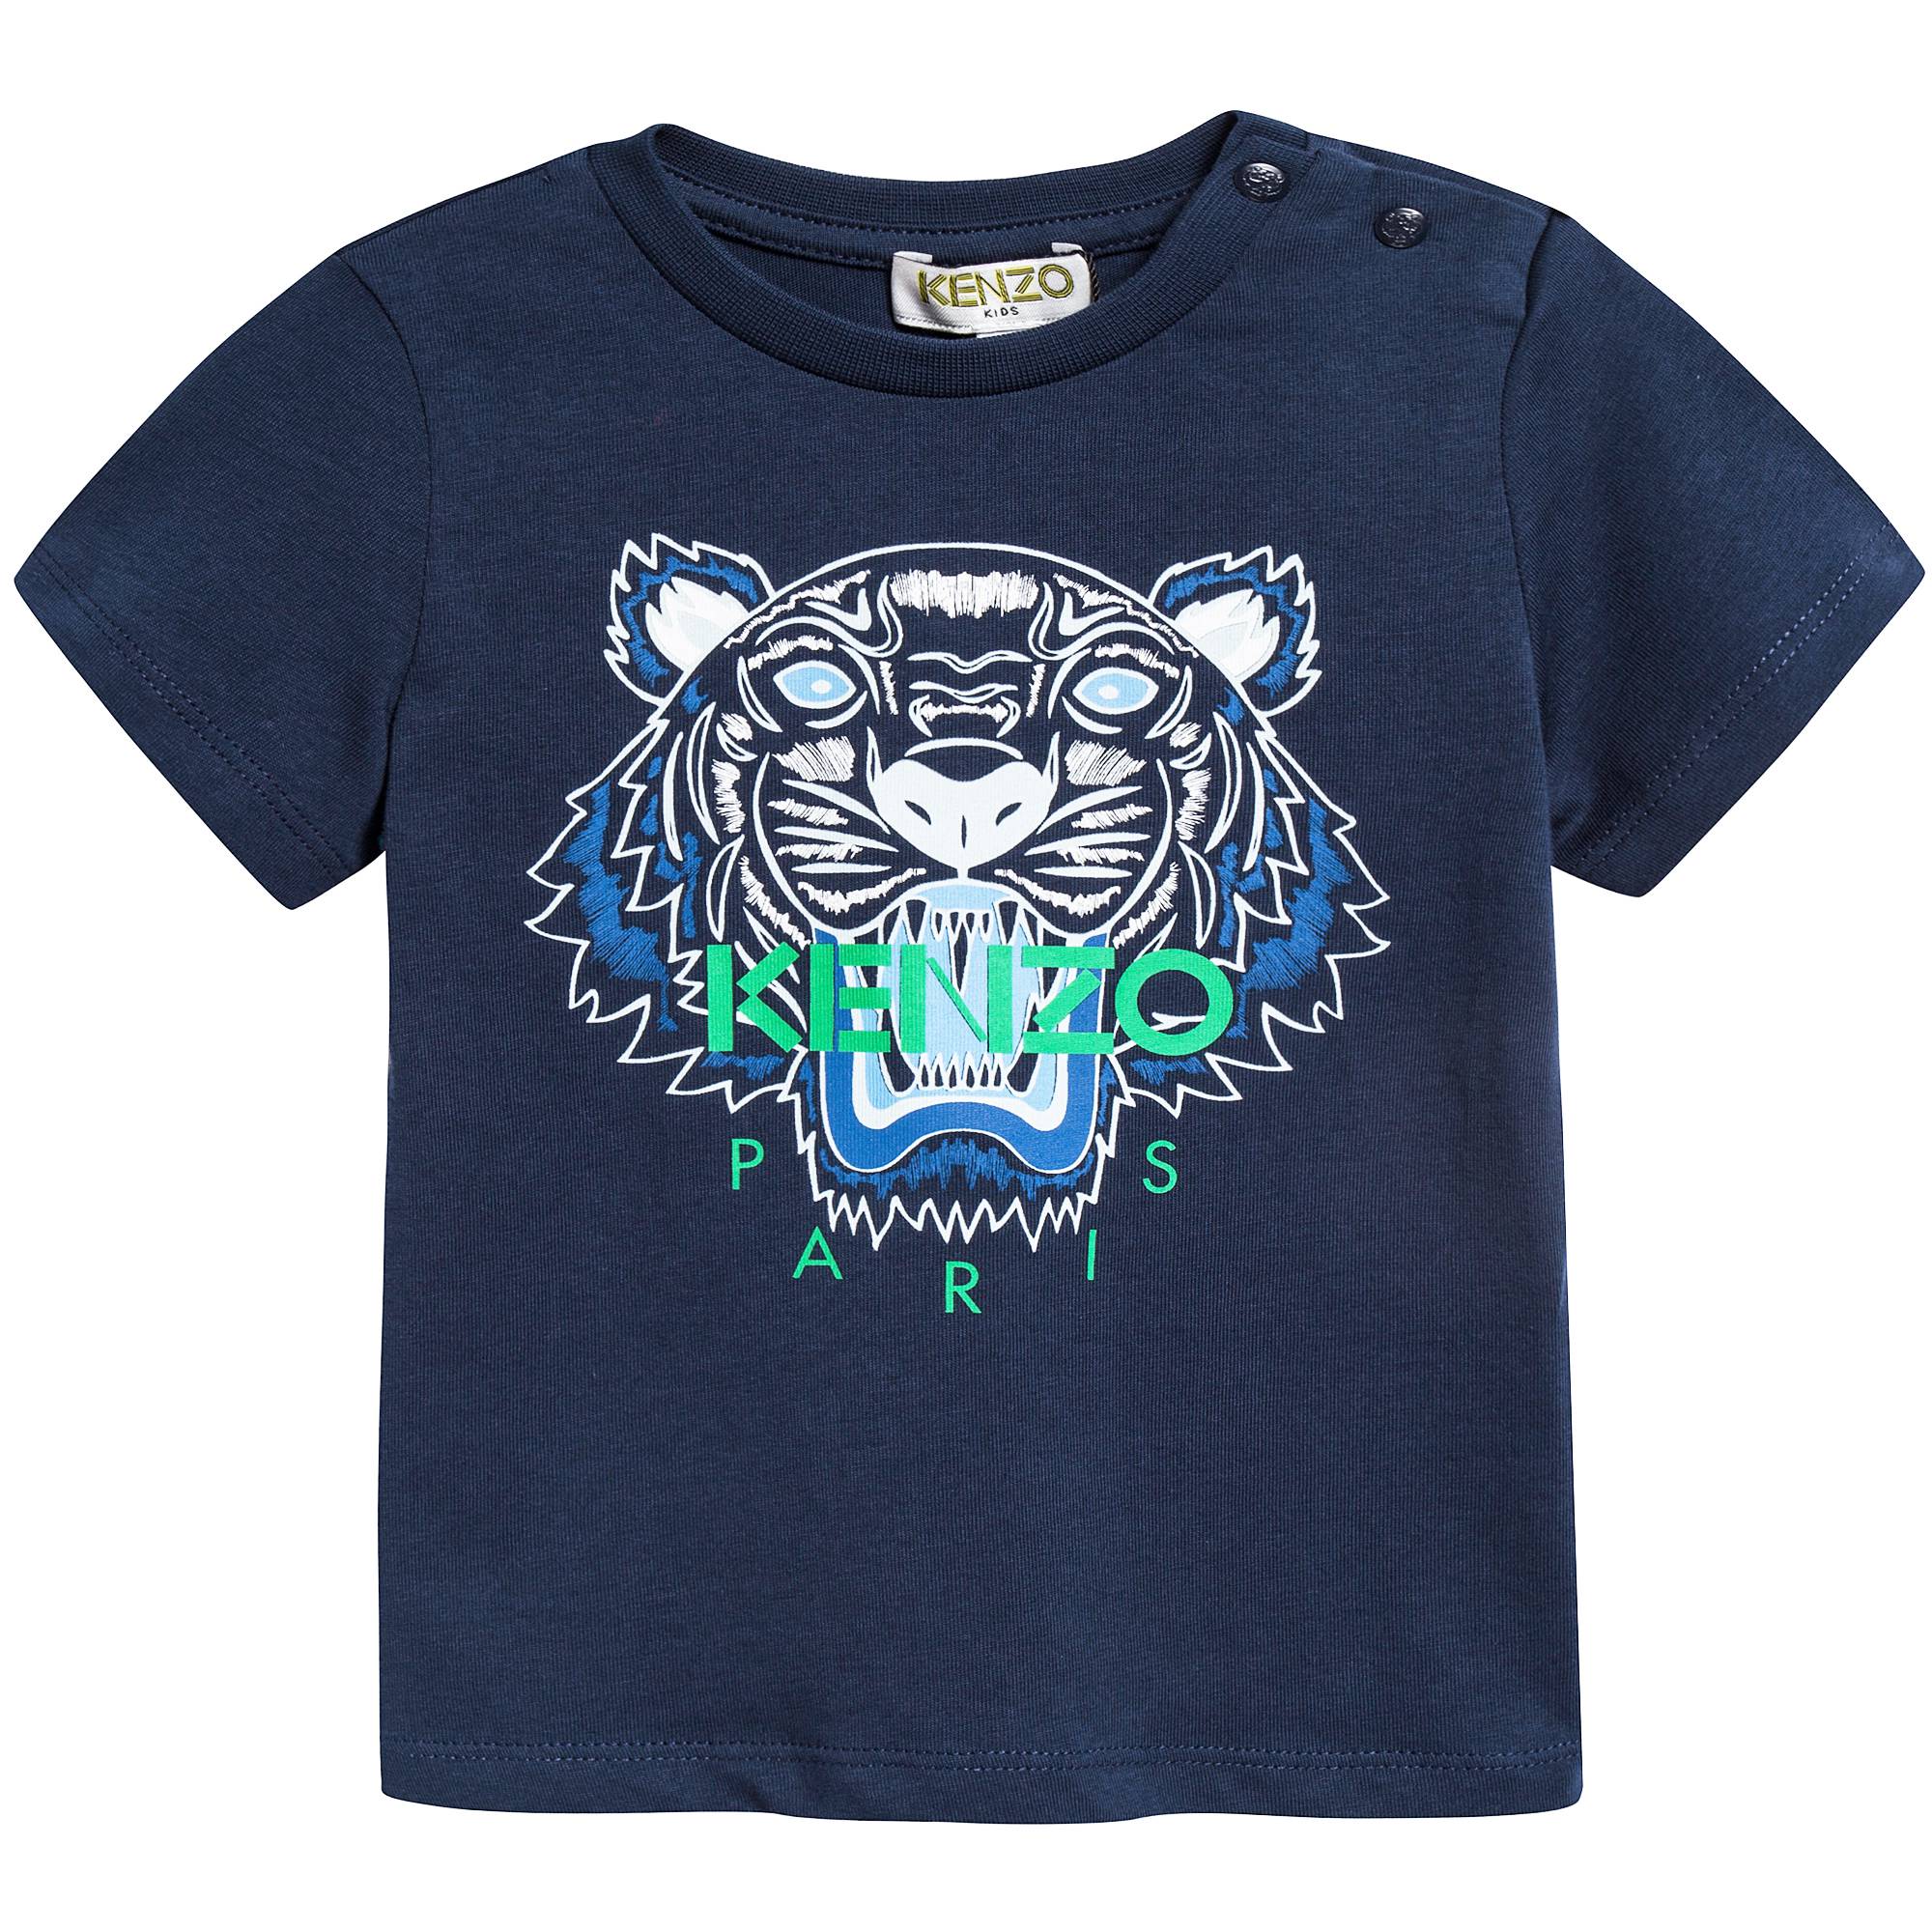 Boys Navy Tiger Printed Cotton T-shirt